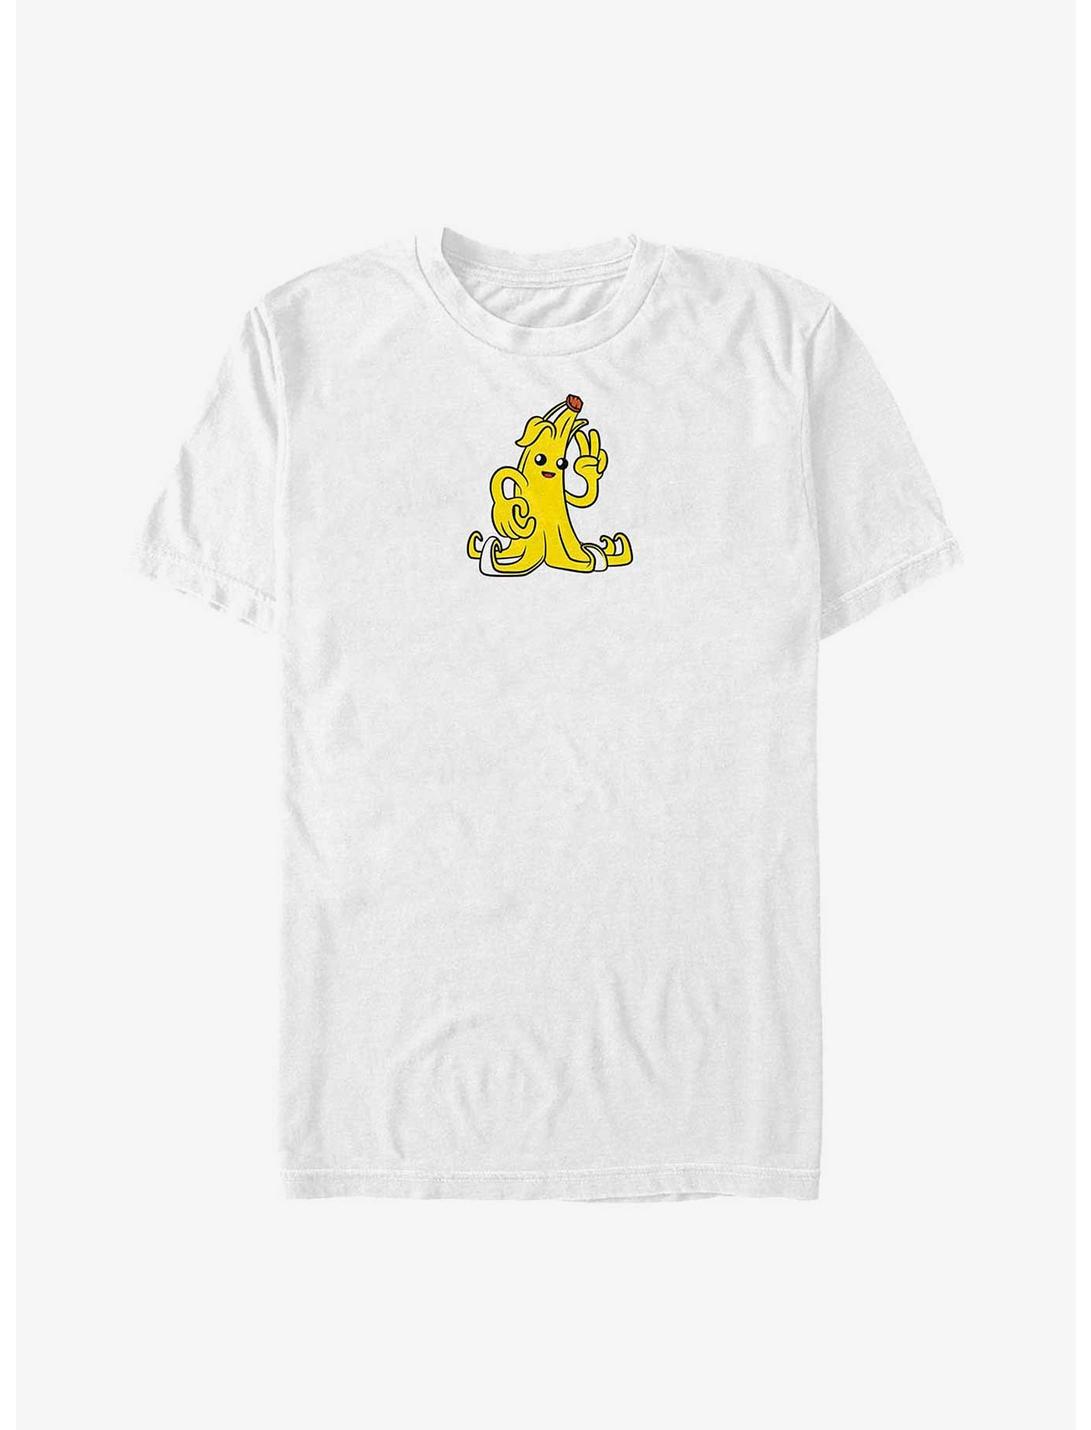 Fortnite Peely Banana Peace T-Shirt, WHITE, hi-res